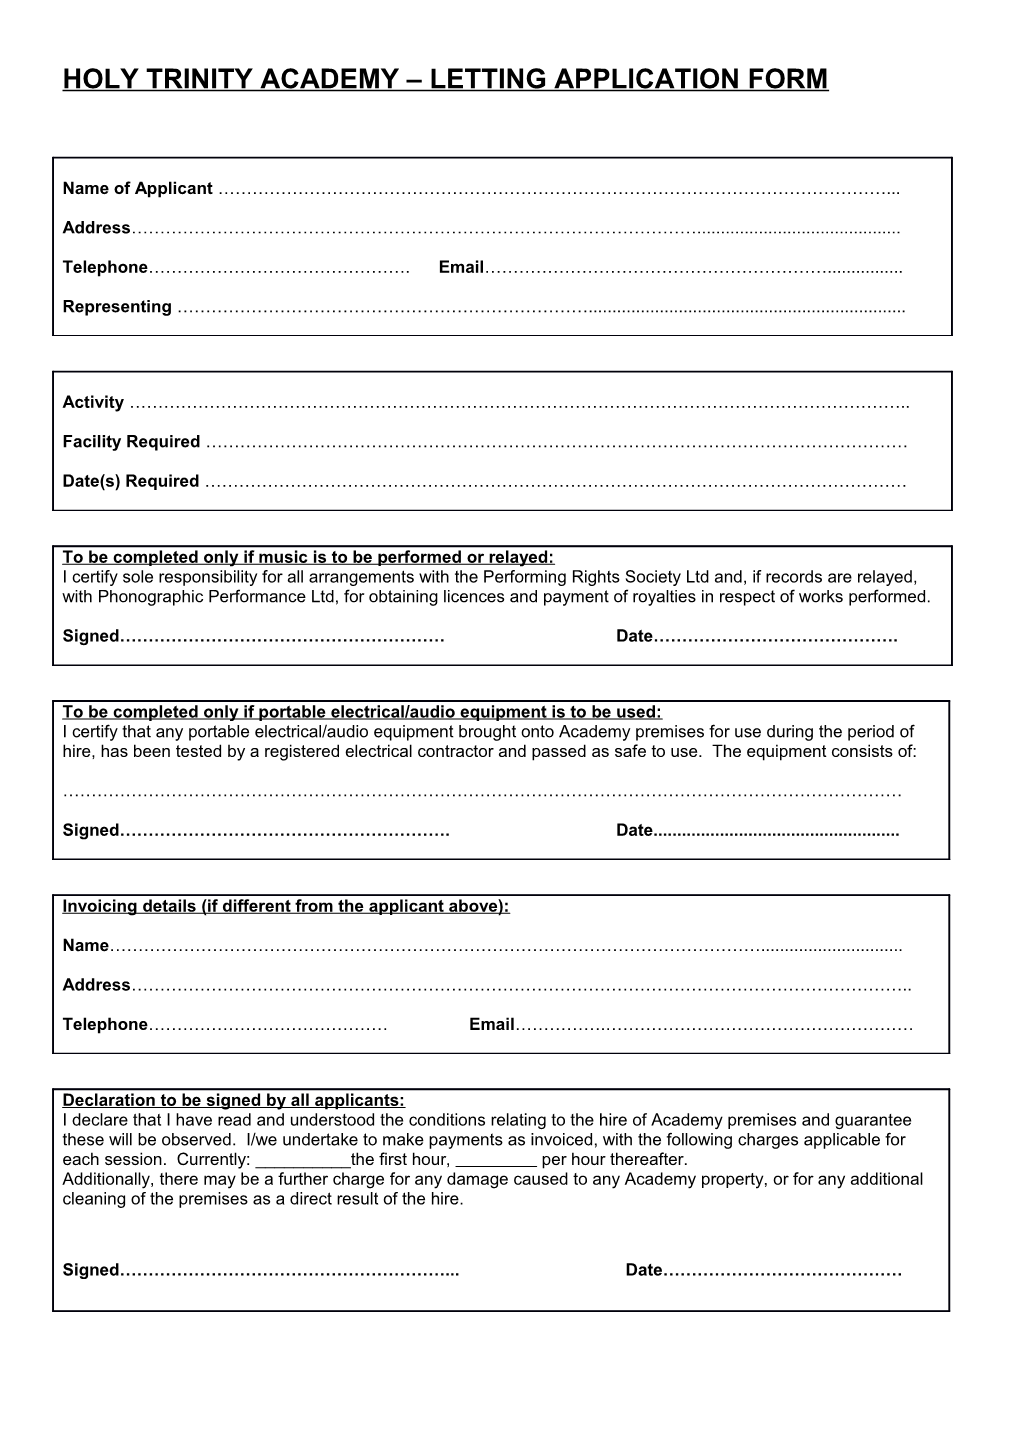 Holy Trinity Academy Letting Application Form